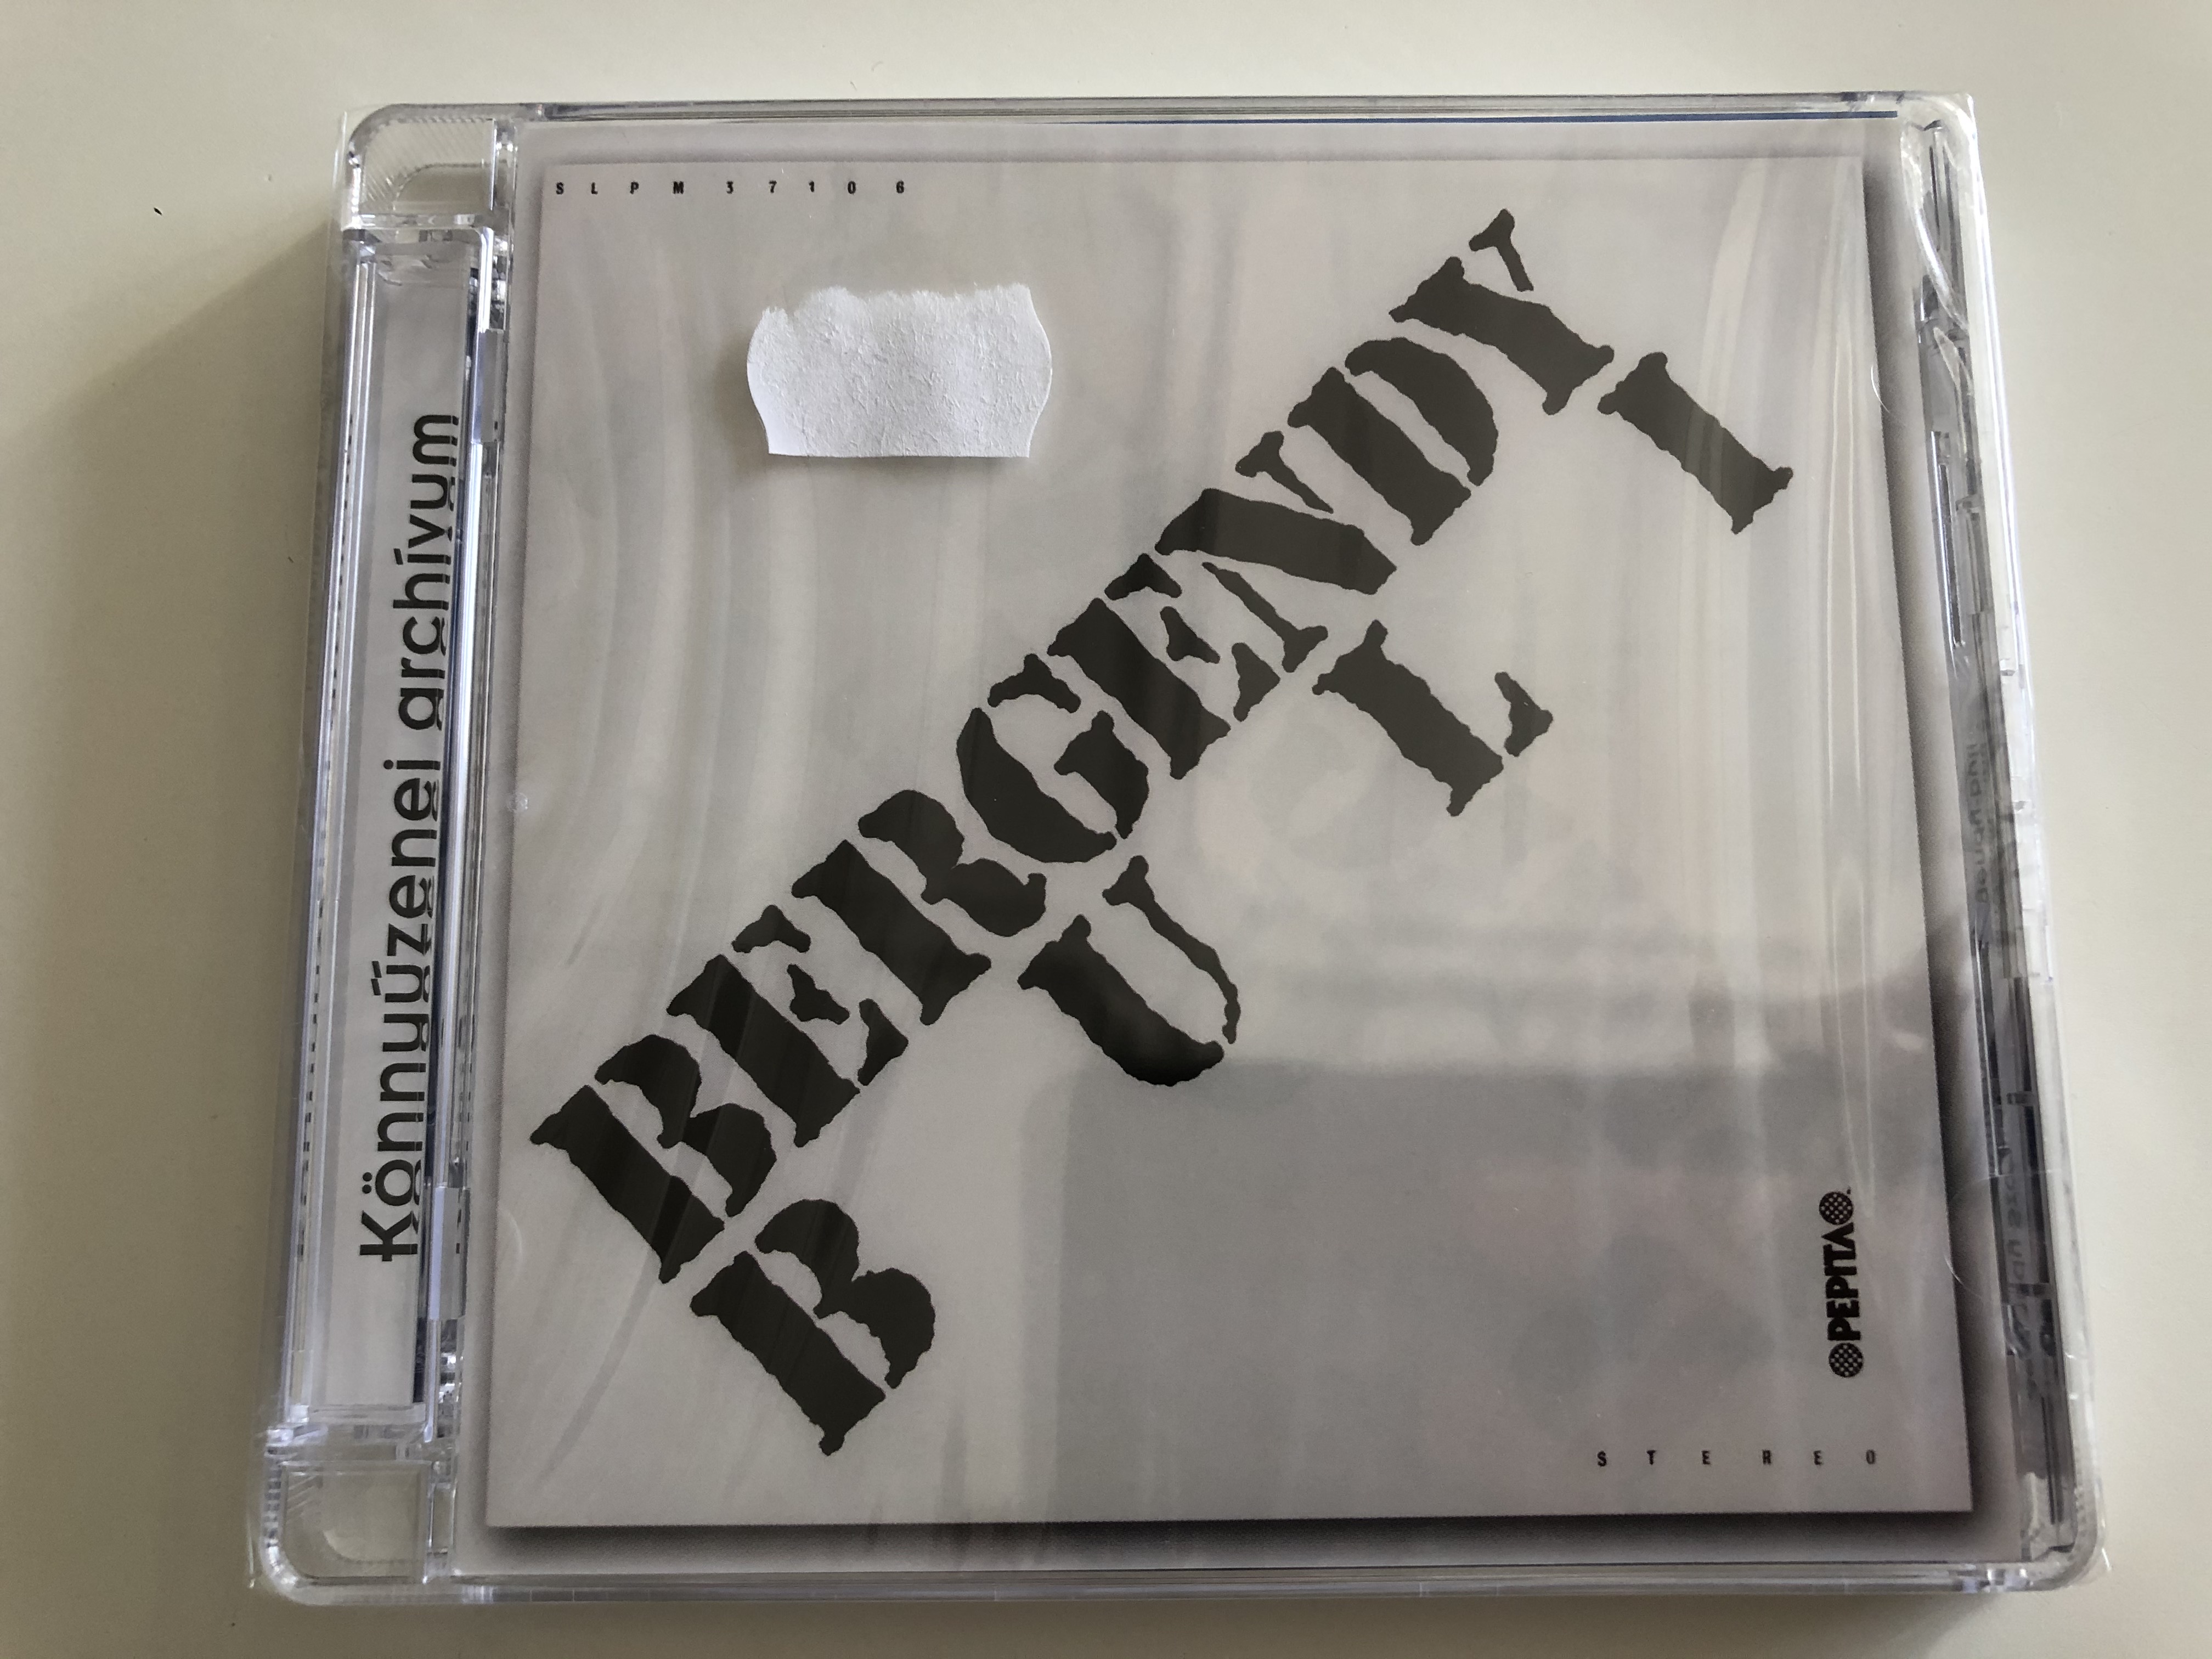 bergendy-buli-hungaroton-audio-cd-2009-pdkcd0041-1-.jpg